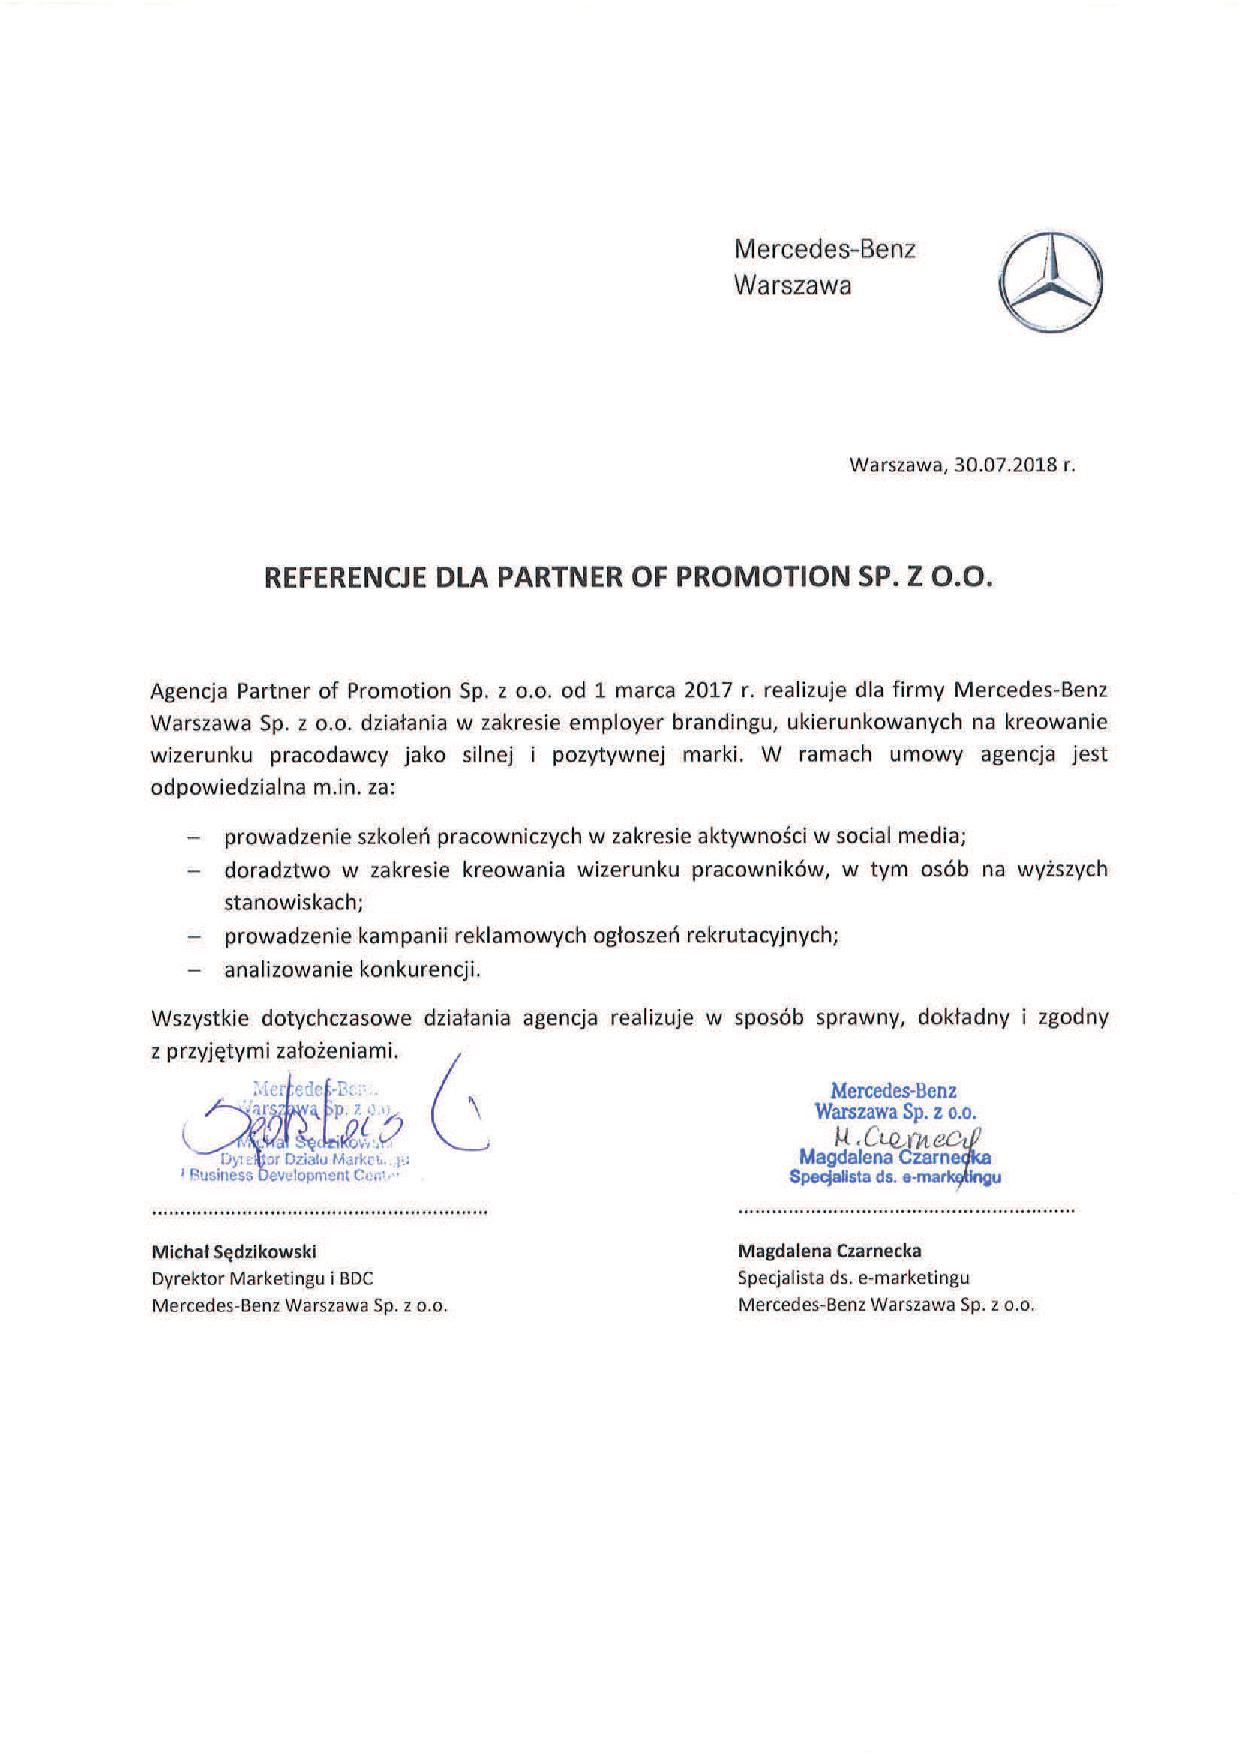 Mercedes-Benz Warszawa_referencje_employer branding_SKAN_30072018.jpg